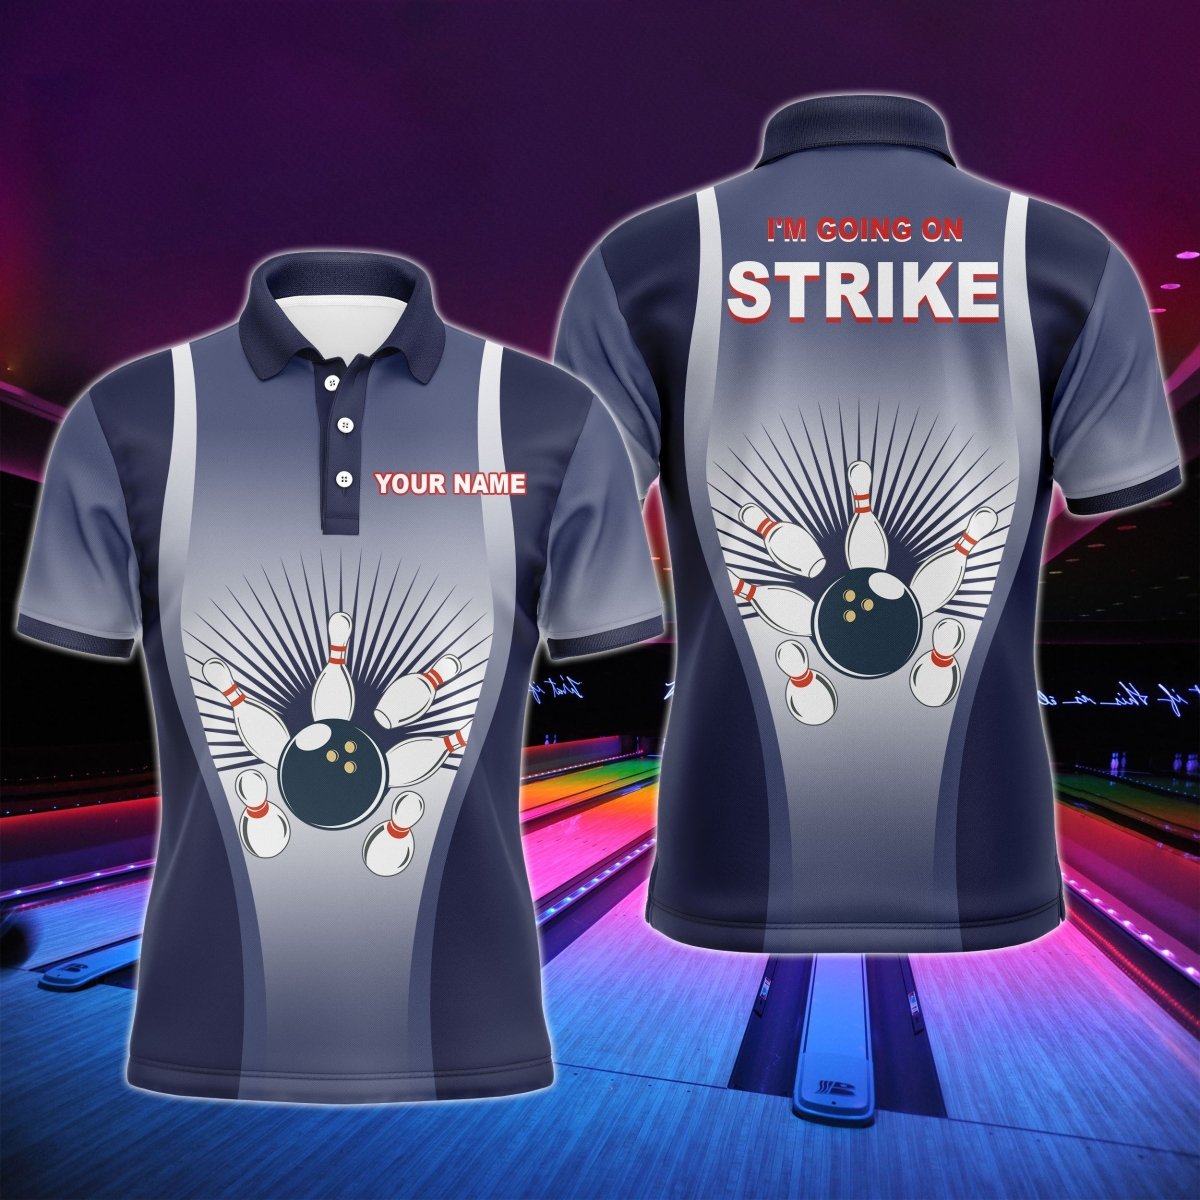 Personalisiertes Herren Polo Bowling Shirt "I'm Going on Strike", blaues Team Trikot für Männer Bowler, kurze Ärmel - Climcat